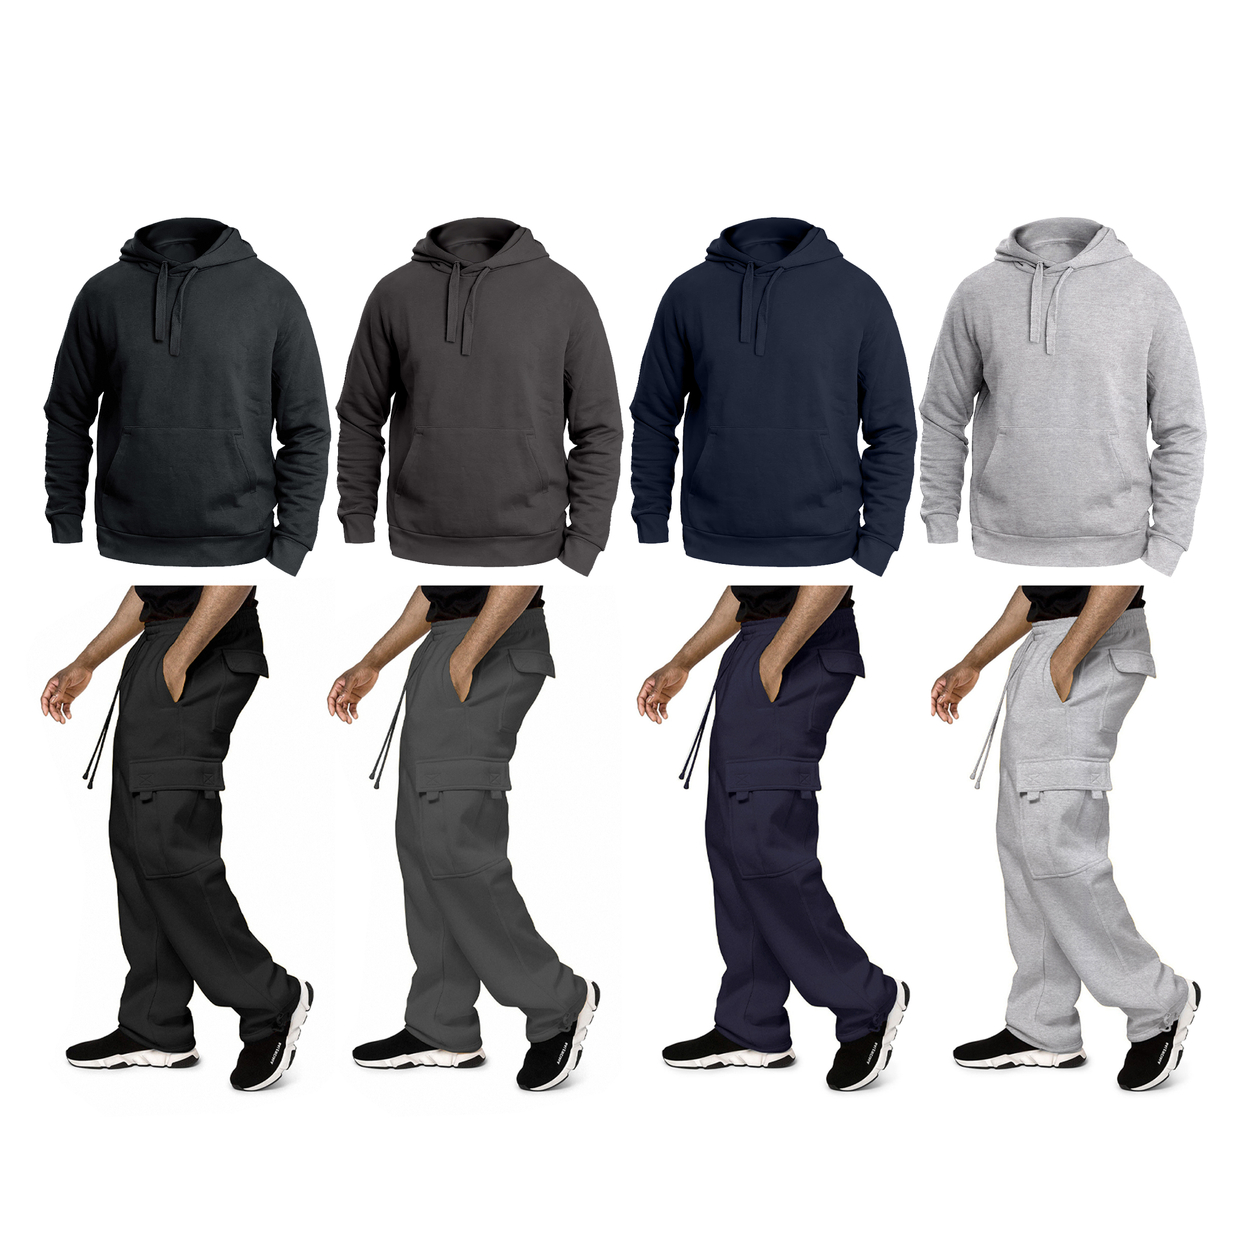 2-Pack: Men's Big & Tall Winter Warm Cozy Athletic Fleece Lined Multi-Pocket Cargo Sweatsuit - Grey, X-large